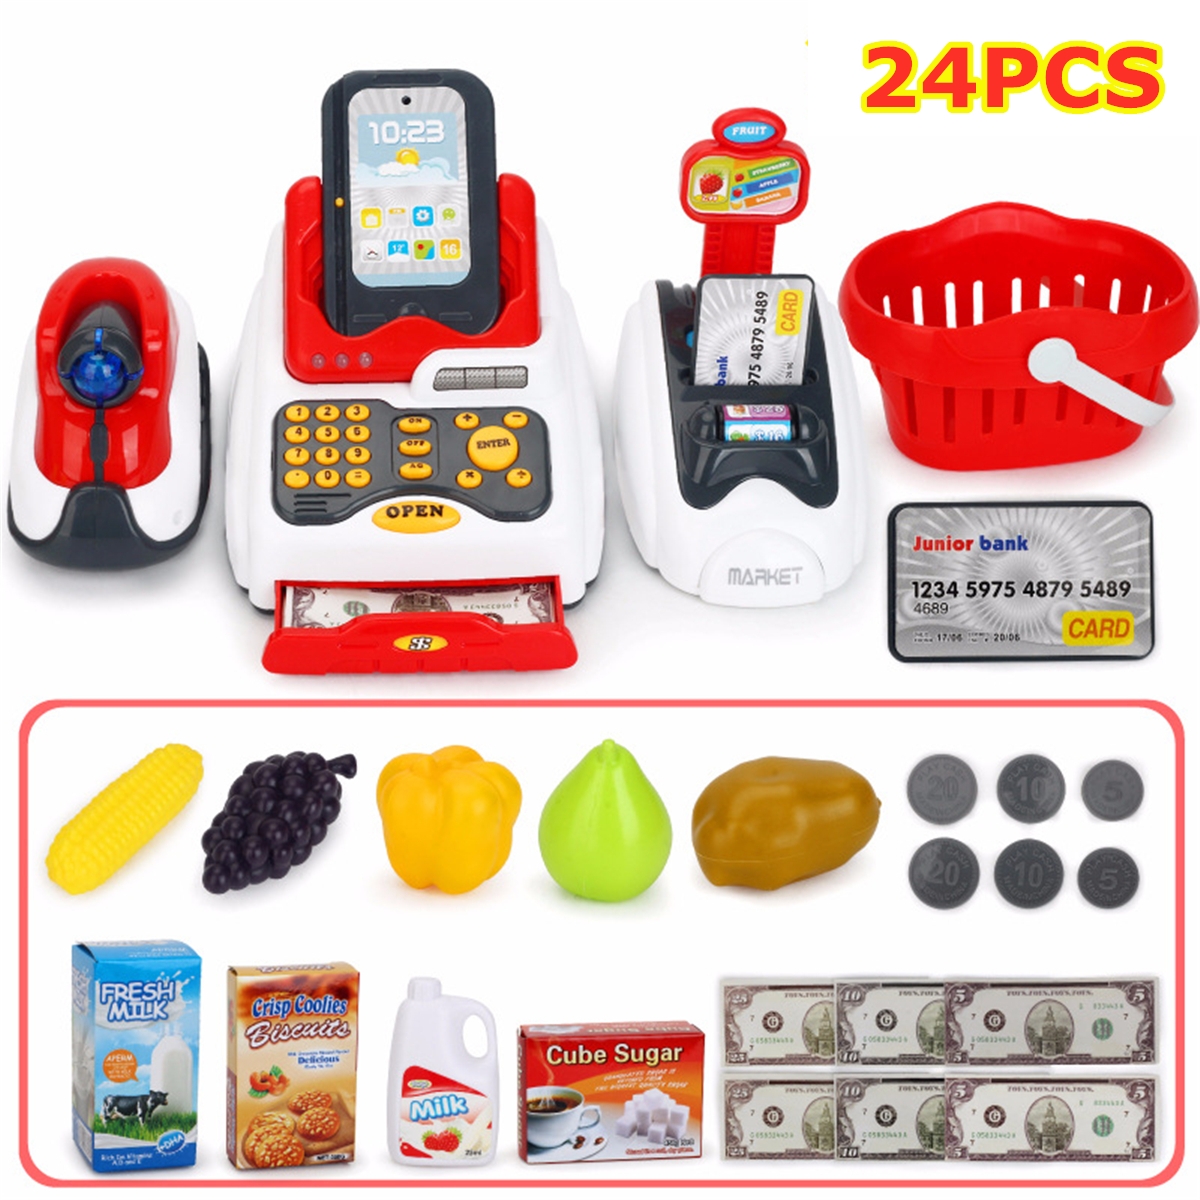 24 PCS Multi-functional Supermarket Simulation Cash Register Interactive Set Toys for Children's Family Tool